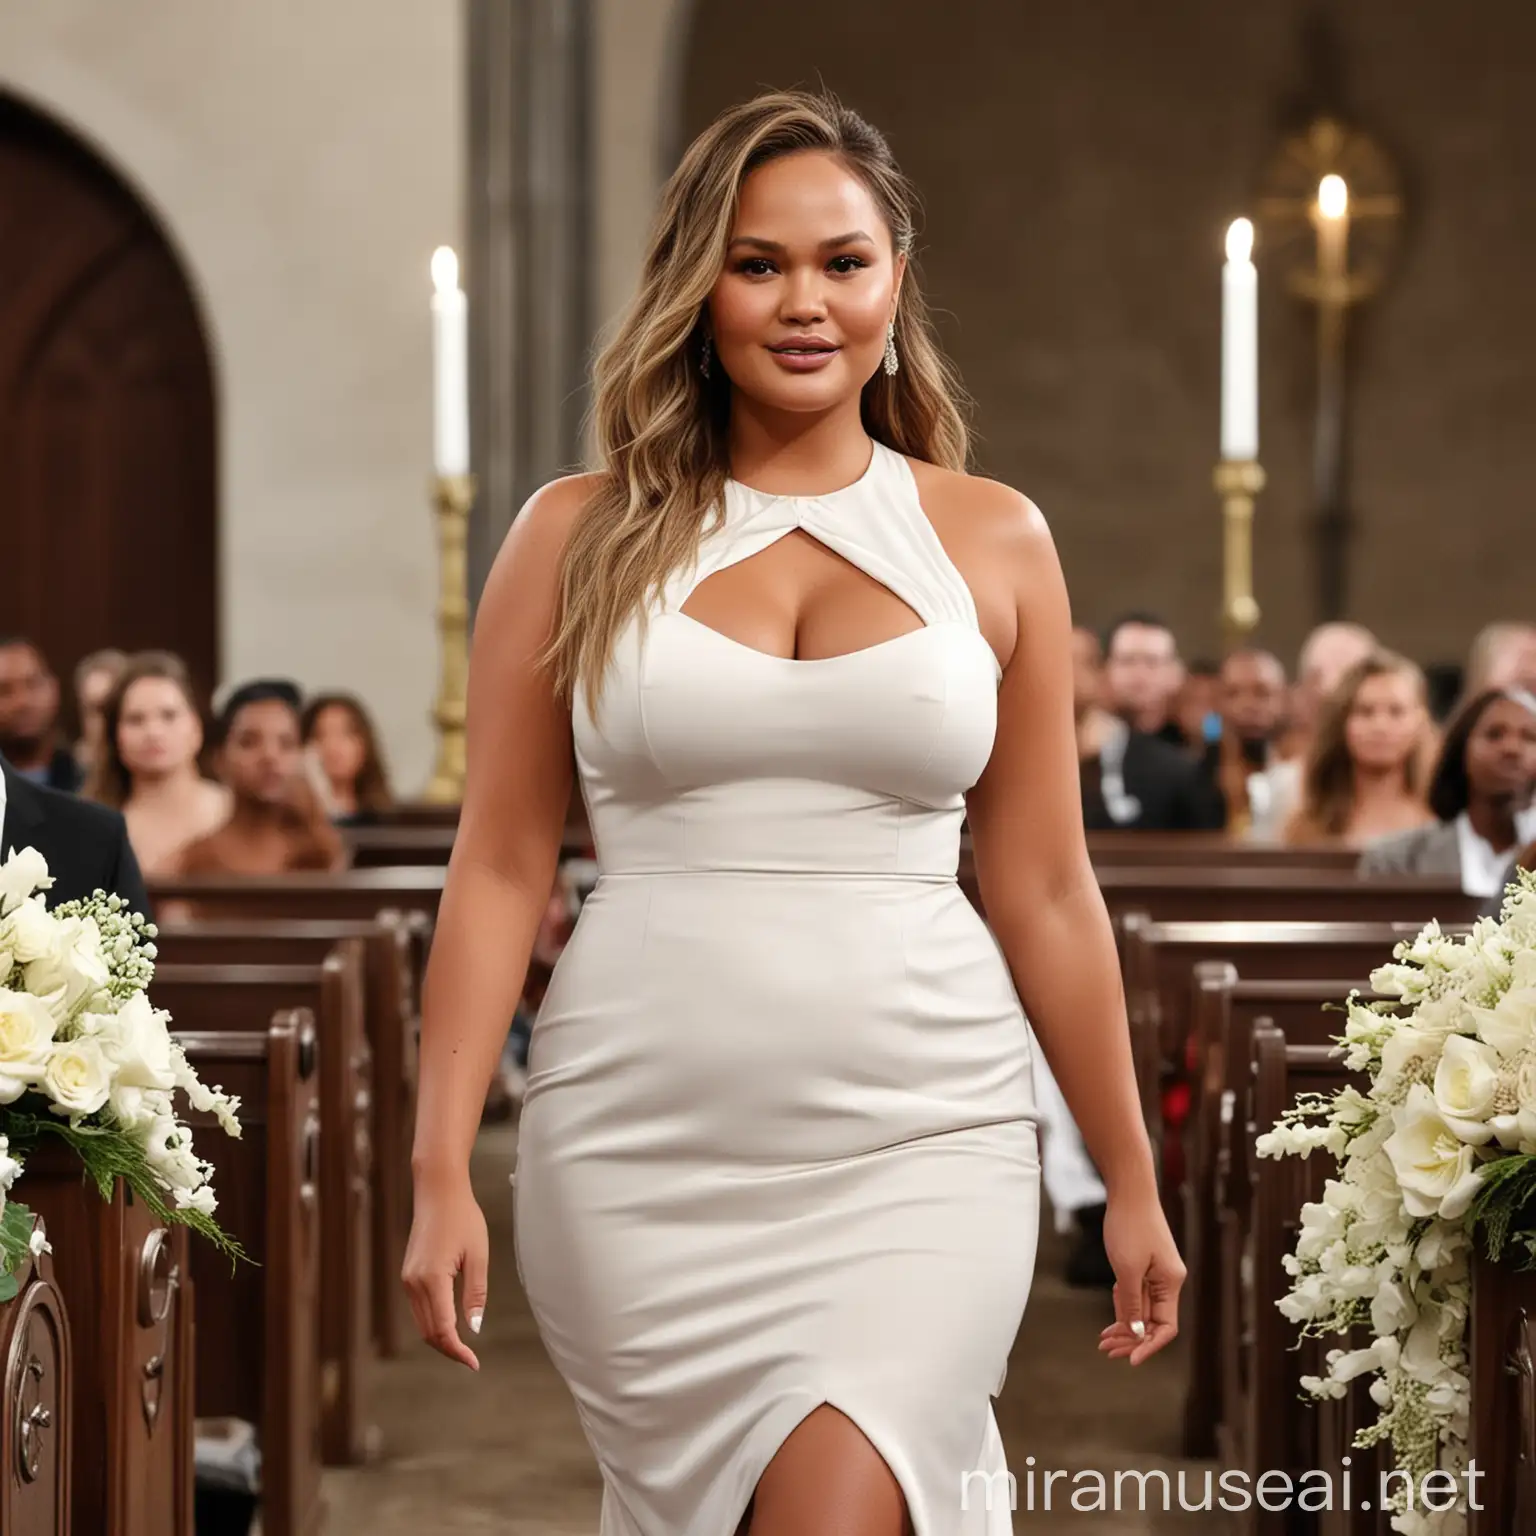 Chrissy Teigen Stunning in Short Wedding Dress Curvy Beauty in Elegant Church Setting